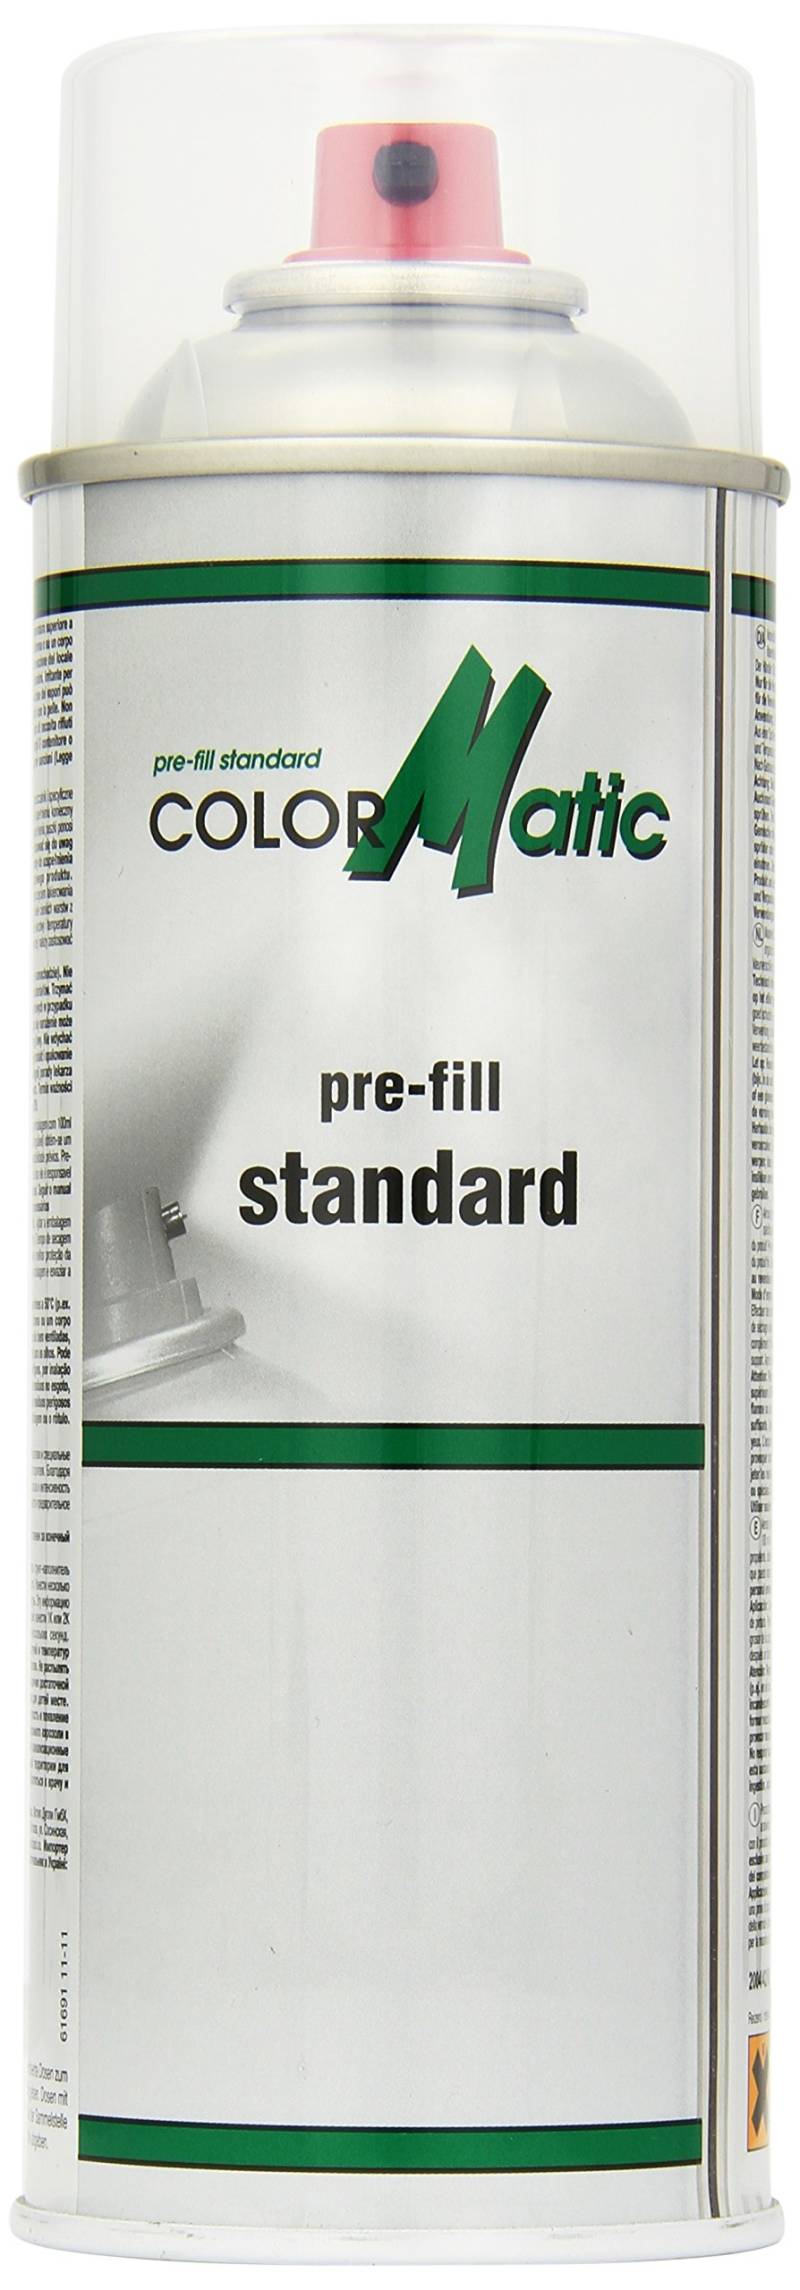 Colormatic 570704 Vorbegefüllte Dose cm Pre-Fill Standard T/V 275, 400 ml von Hella